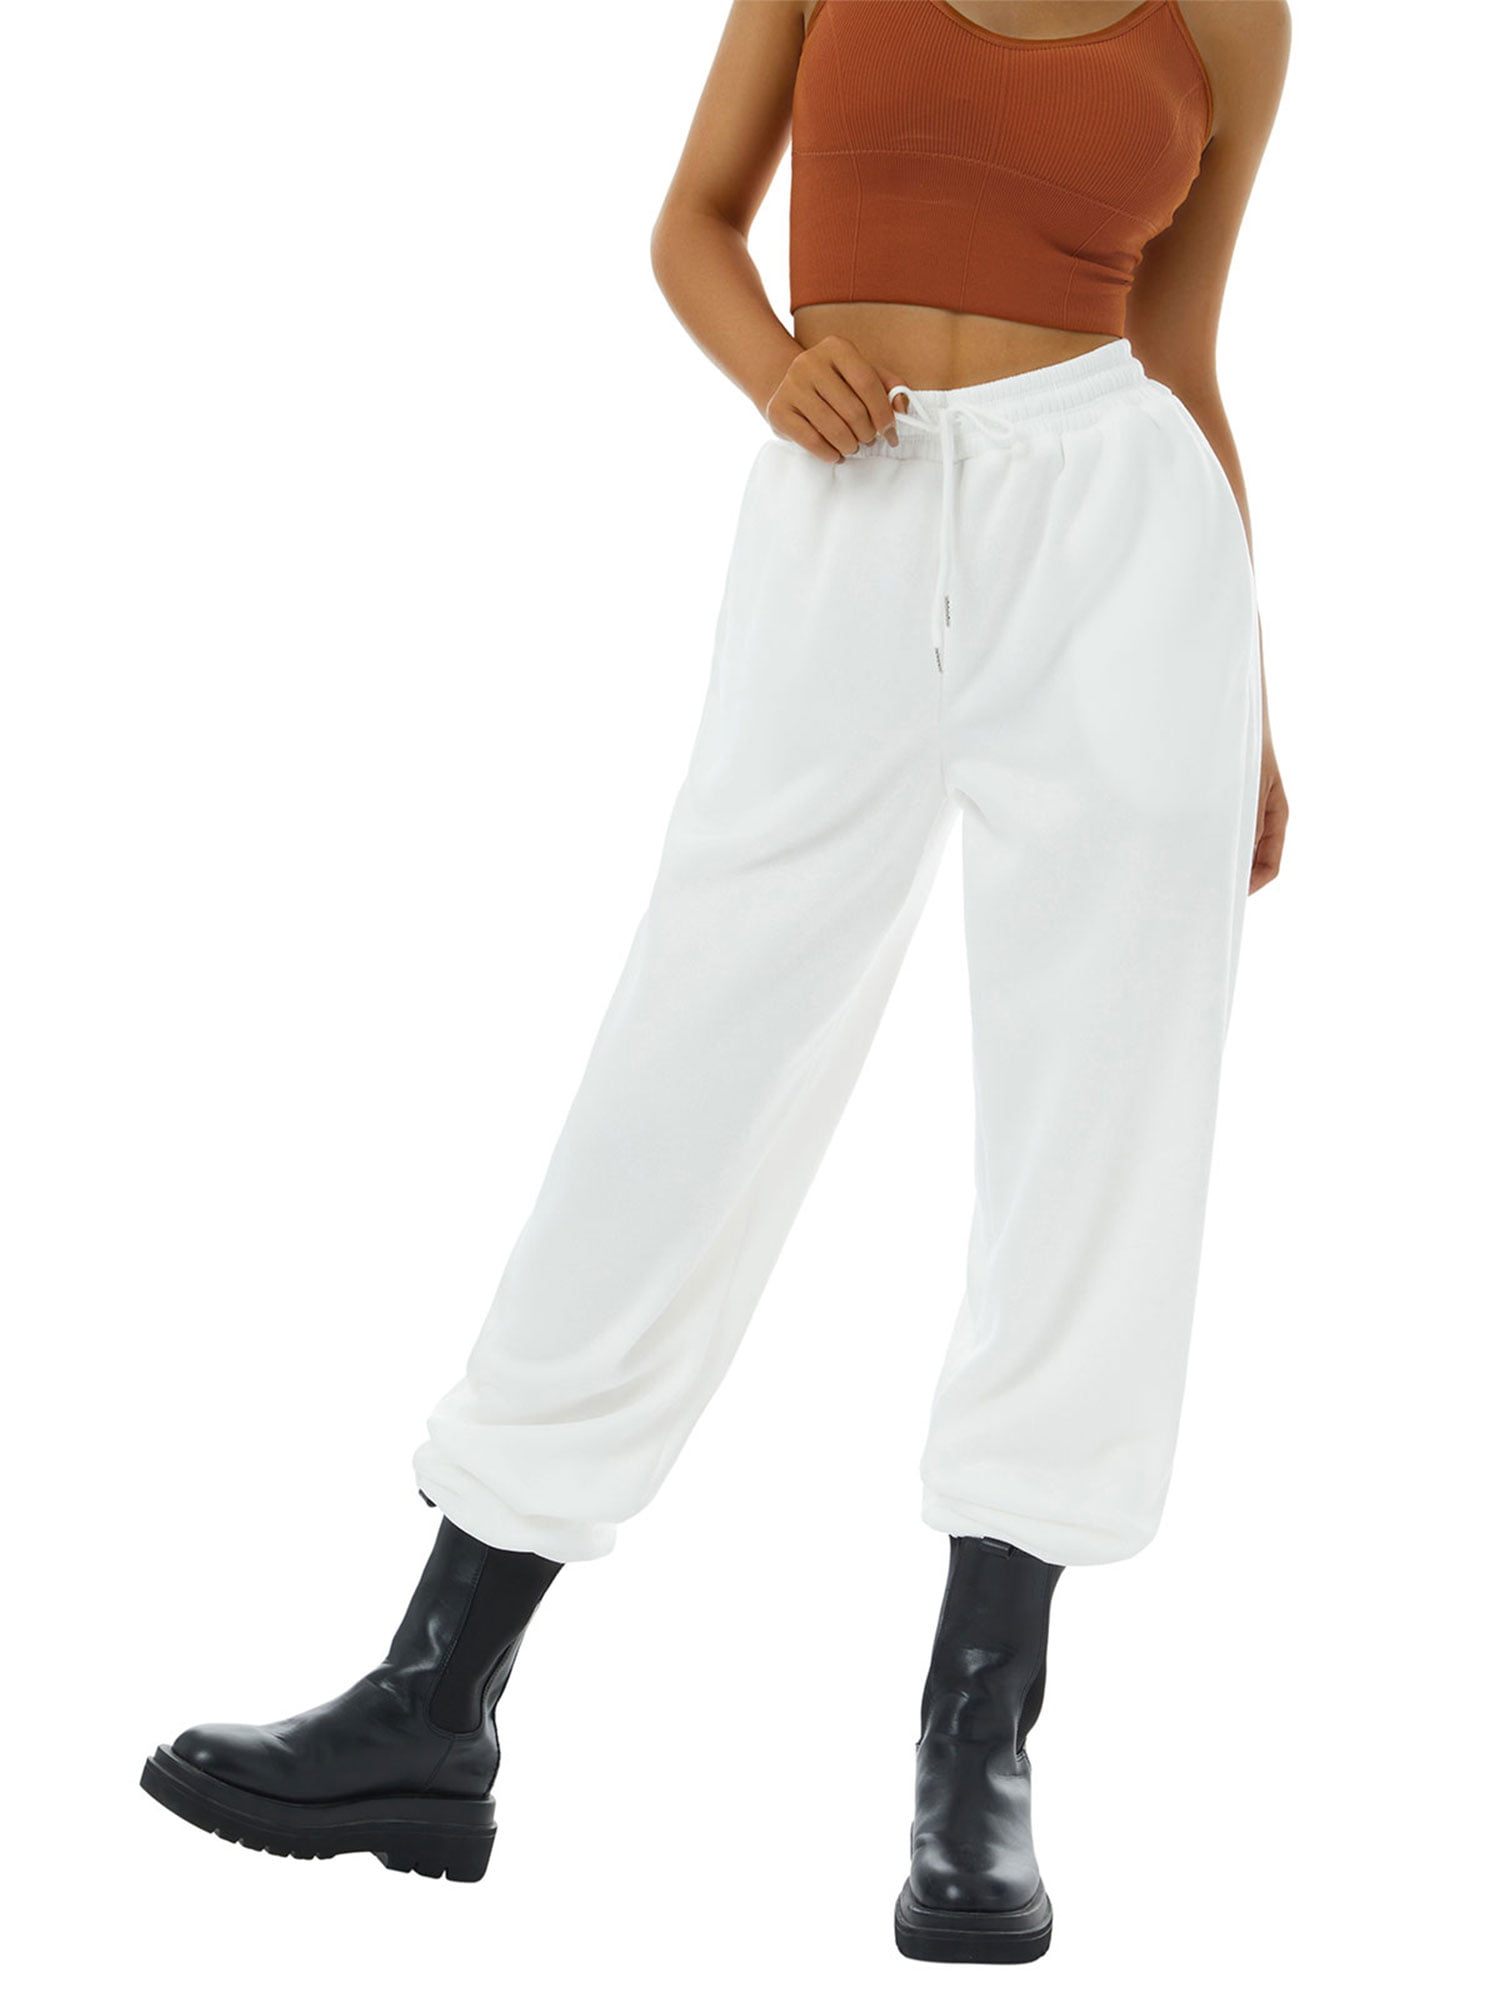 2DXuixsh Women Casual Pants Petite with Pockets Pants Womens Waisted  Sweatpants Comfy Workout High Pants Jean Sweatpants Women Polyester Beige Xl